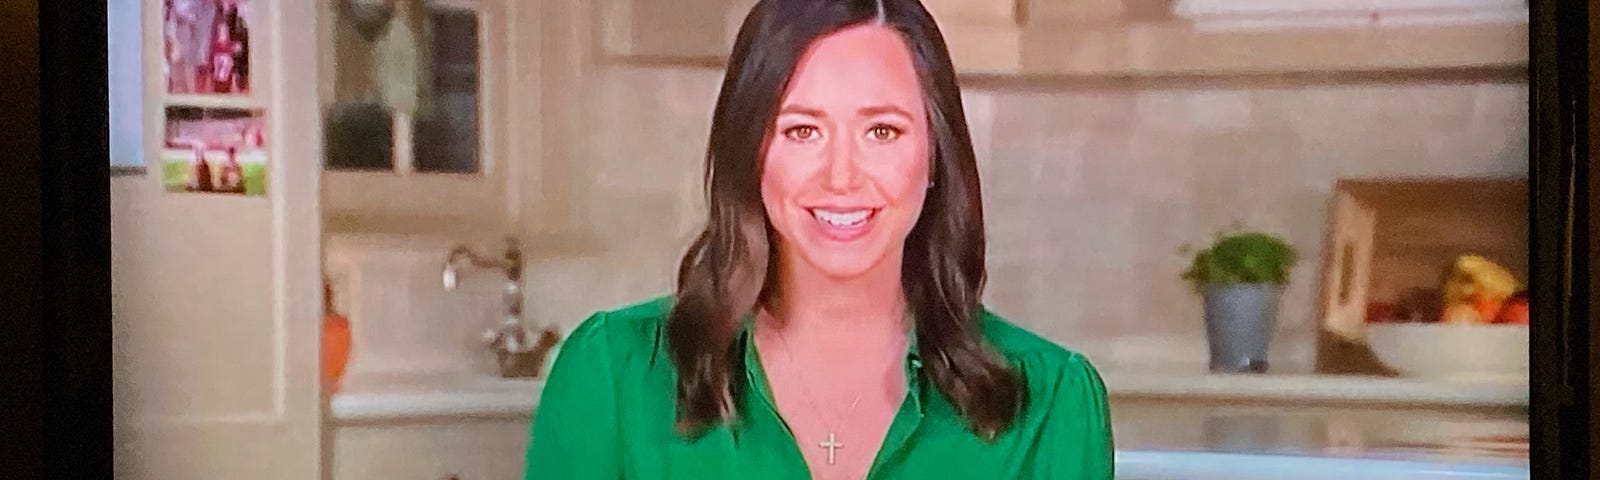 Screen shot of Alabama GOP Senator Katie Britt wearing a green blouse during her rebuttal to President Biden’s State of the Union Address